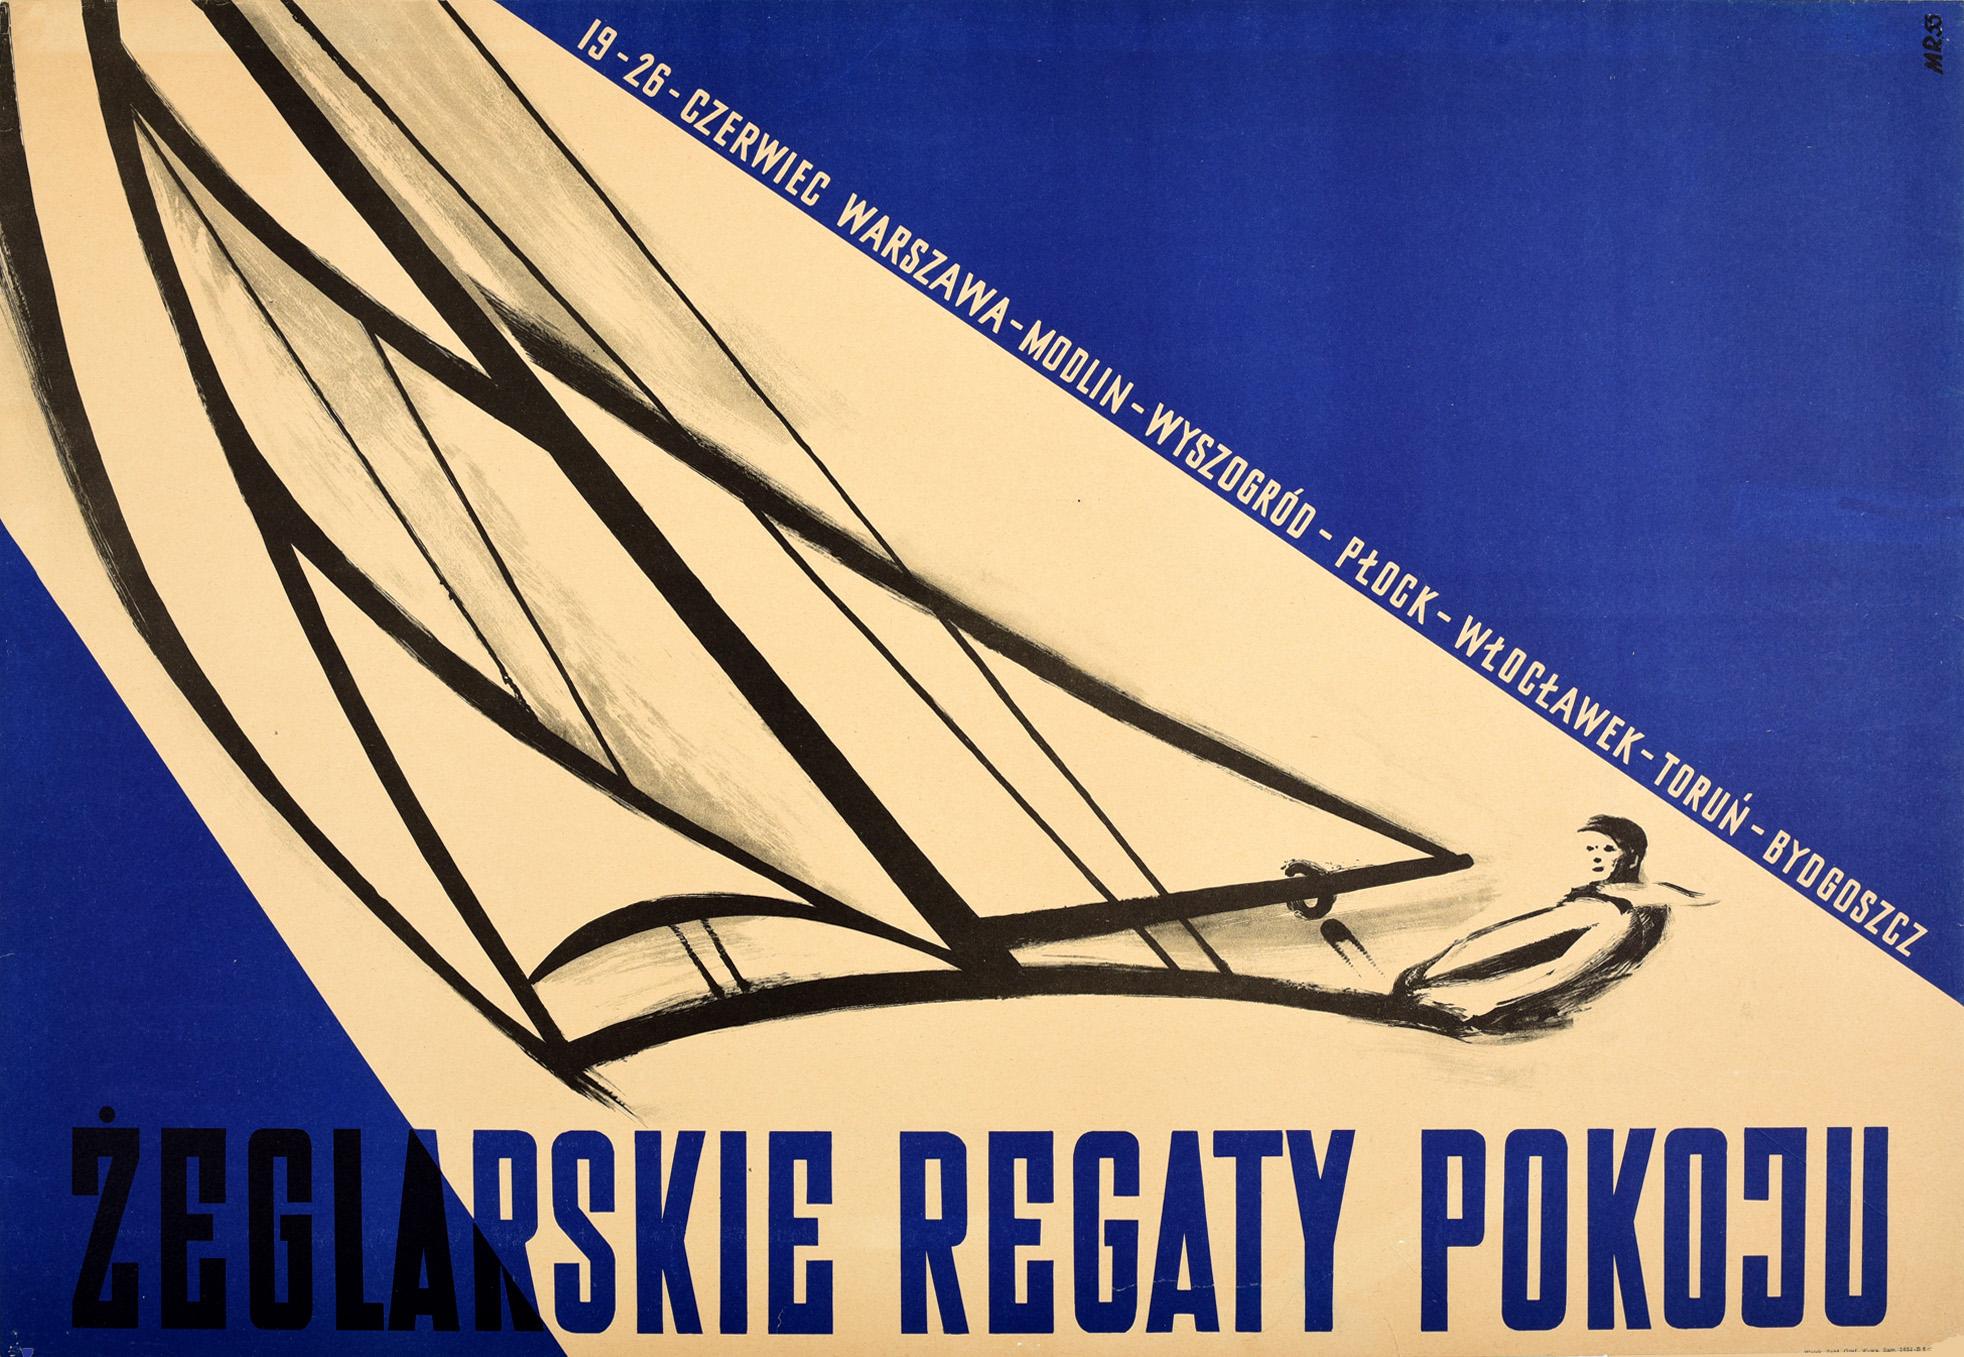 Unknown Print - Original Vintage Poster Peace Sailing Regatta Zeglarskie Regaty Pokoju Sport Art